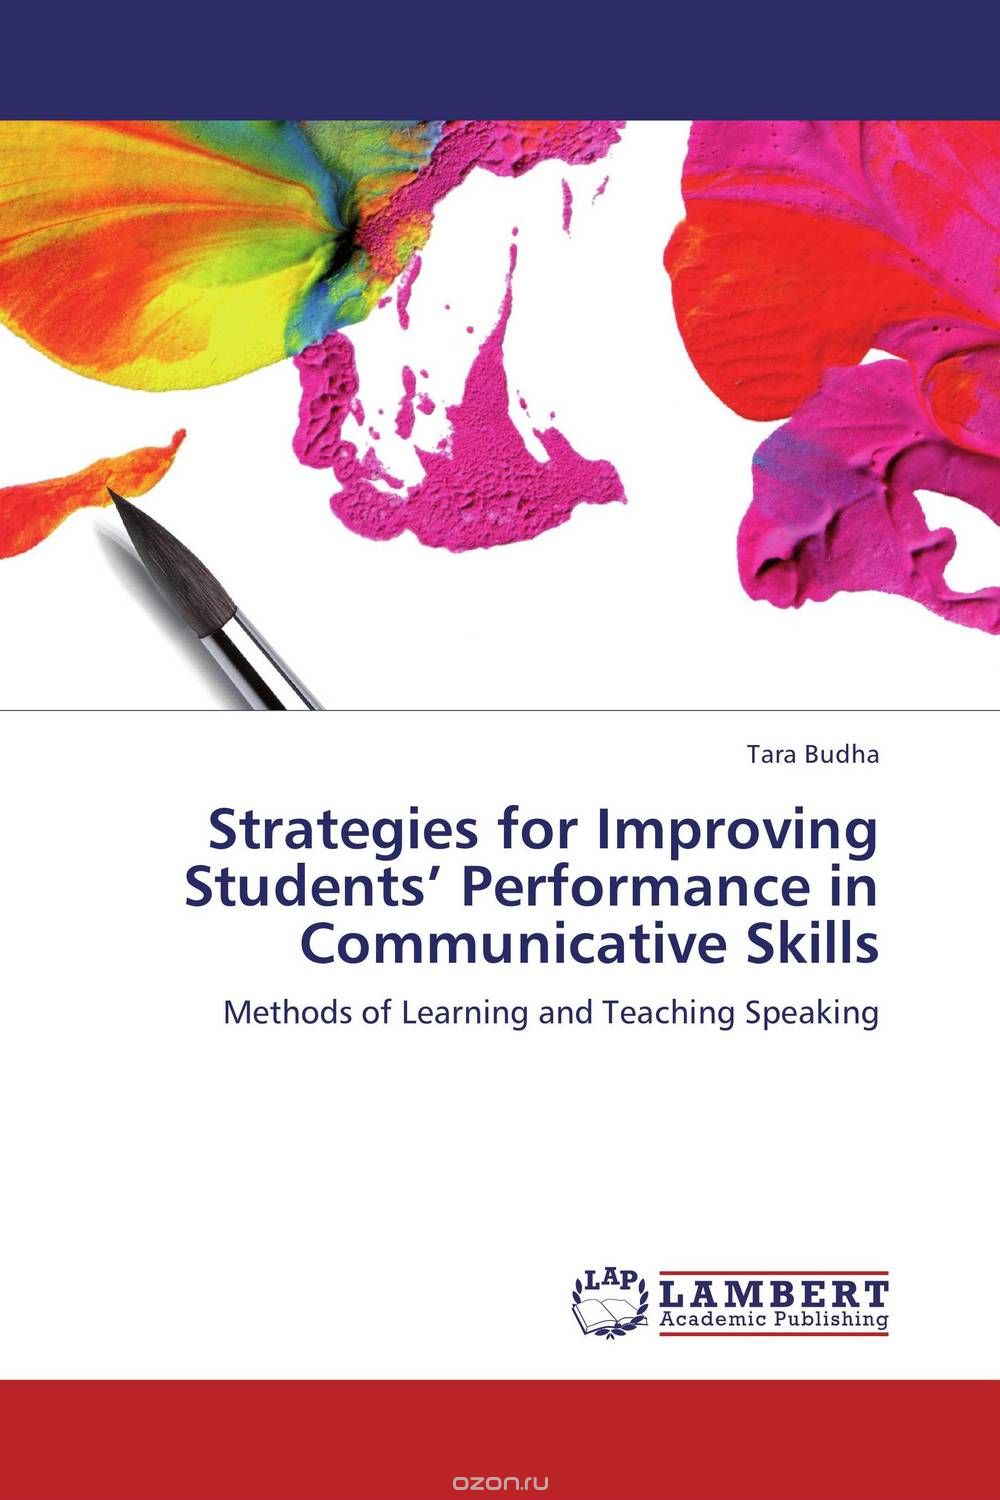 Скачать книгу "Strategies for Improving Students’ Performance in Communicative Skills"